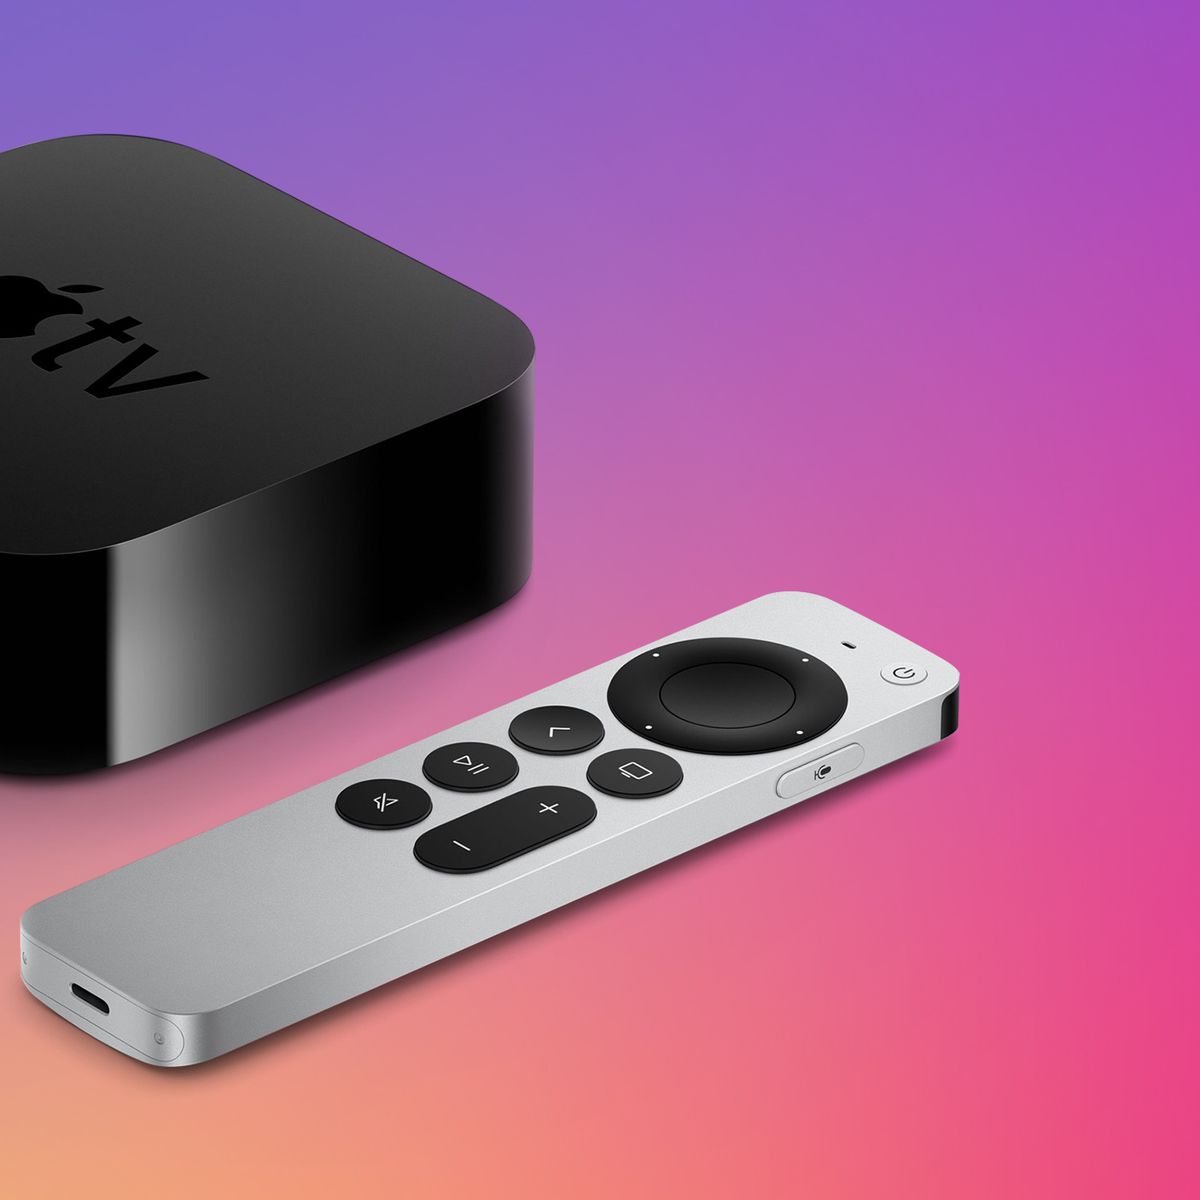 Deals: 32GB Apple TV 4K on Sale for $159.99 ($19 Off)